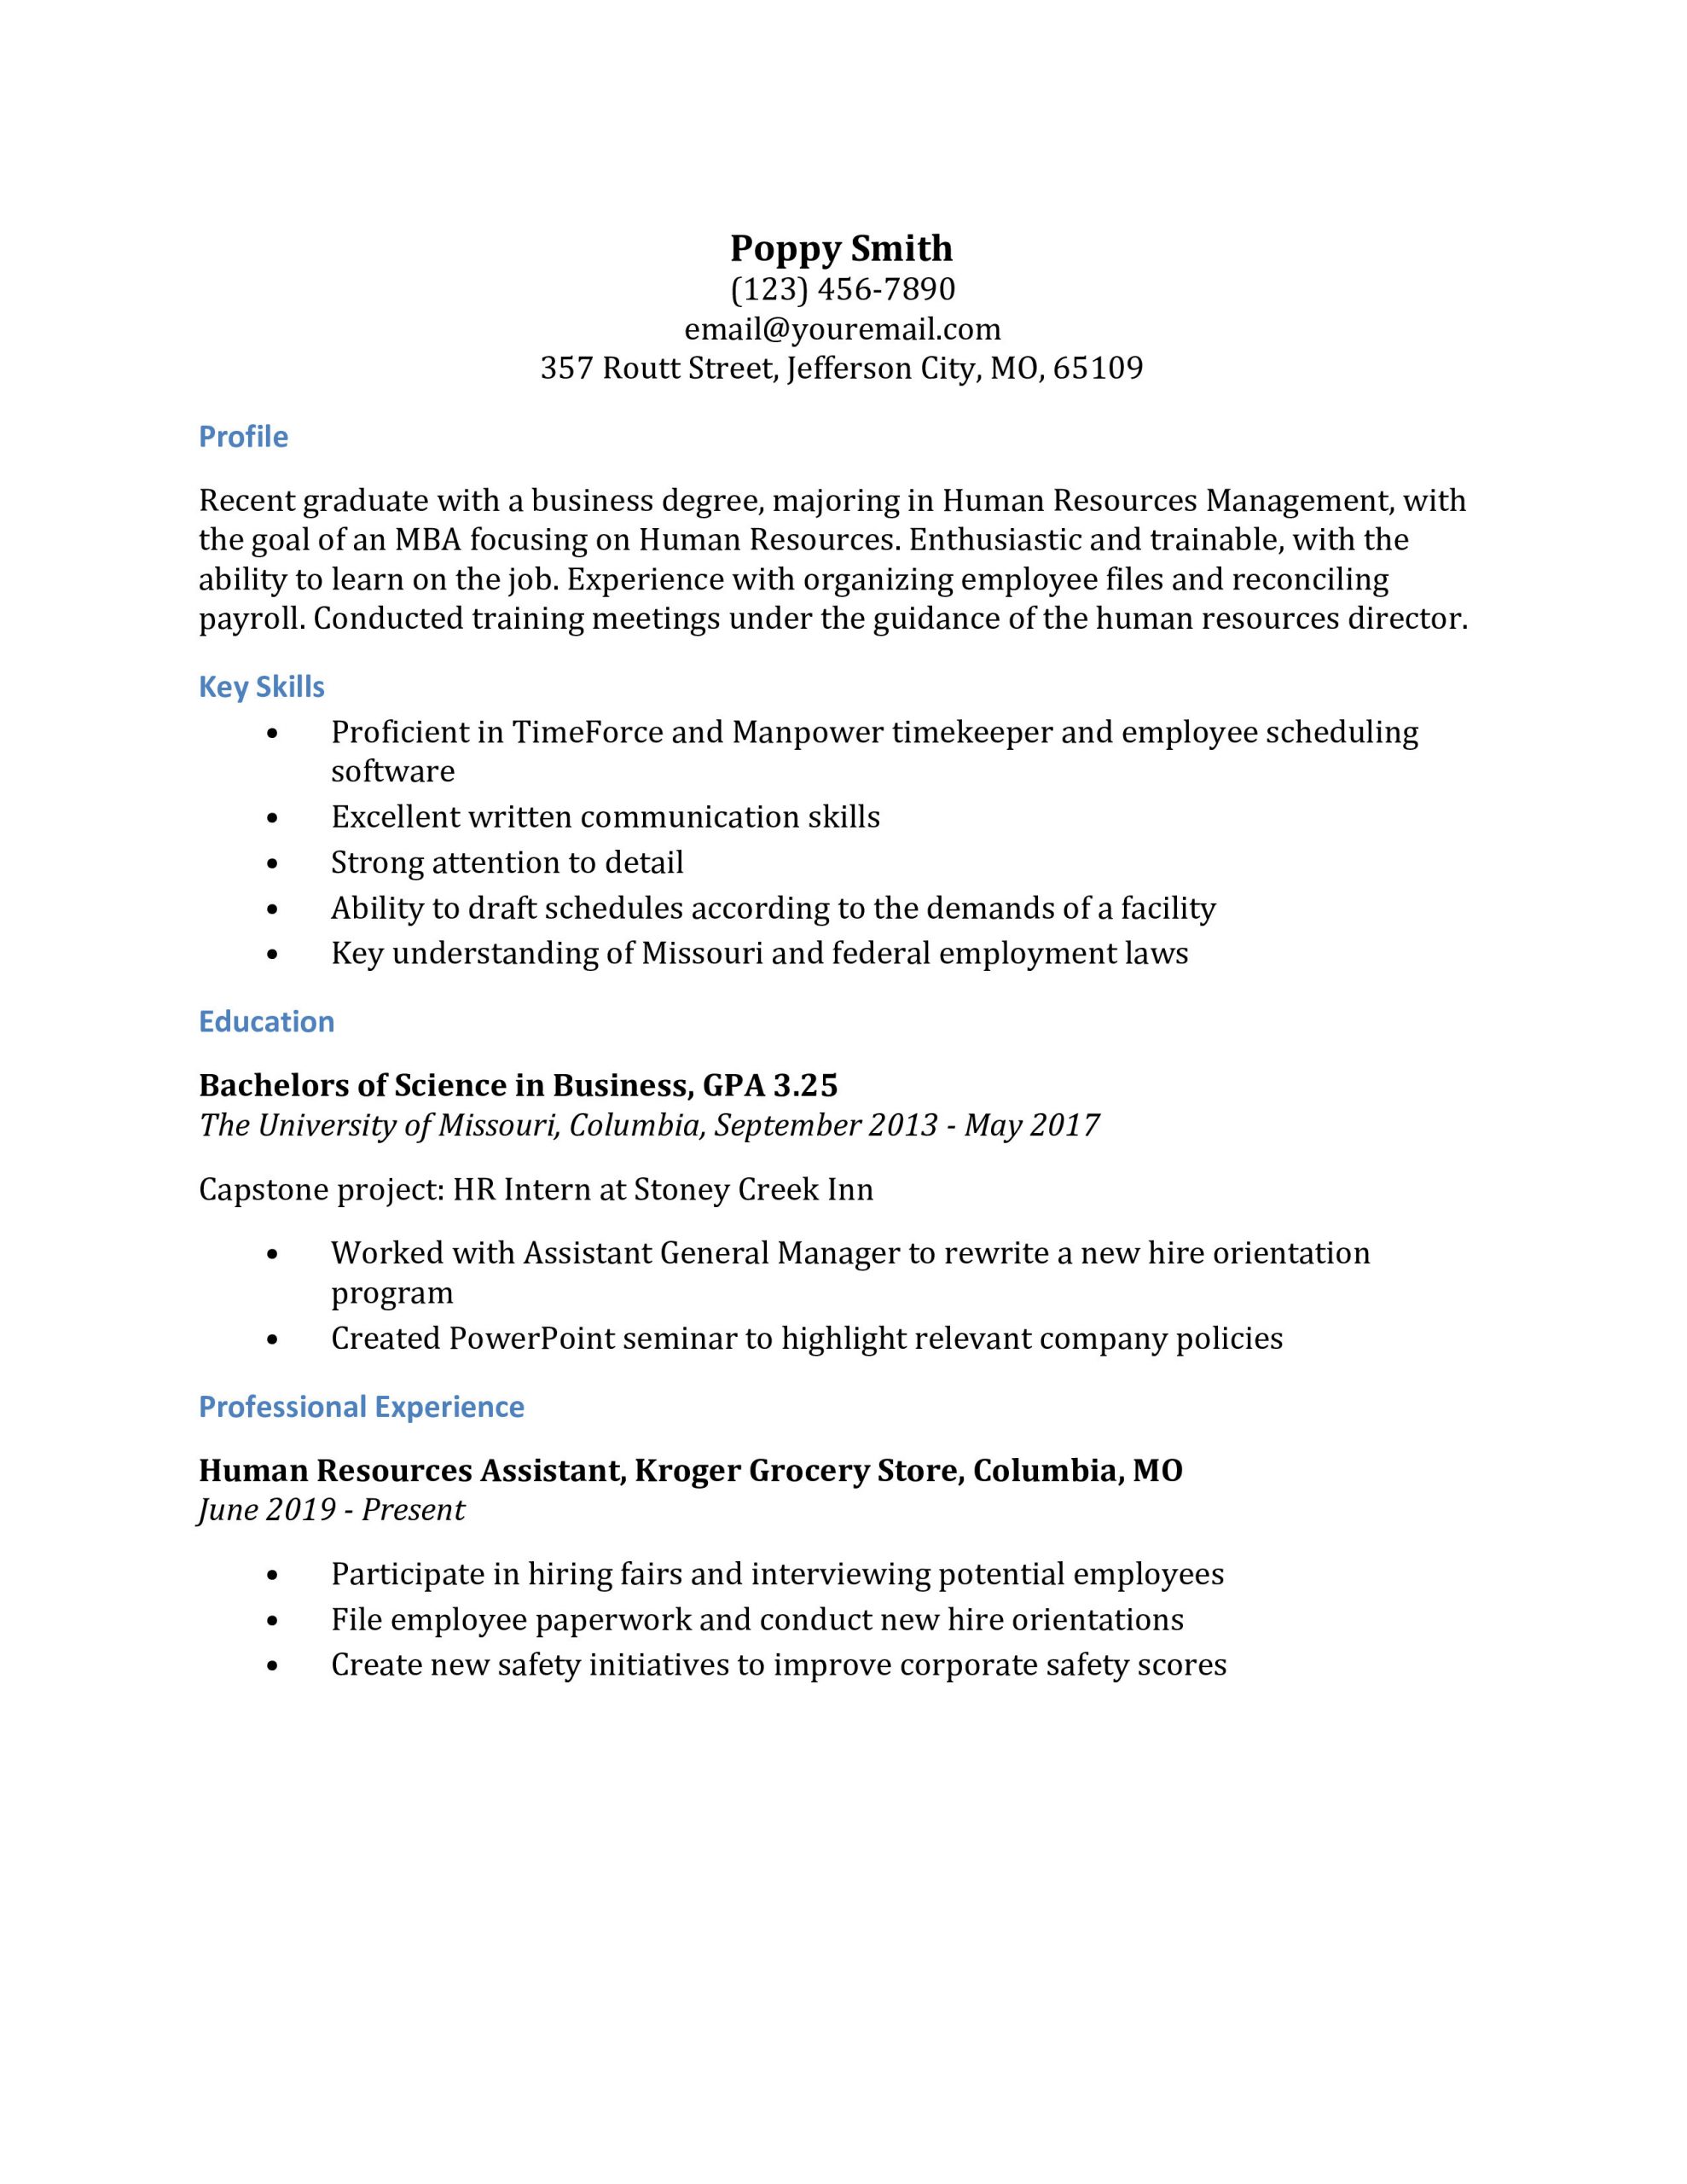 Sample Resume for Internship In Human Resource Human Resources Resume Examples – Resumebuilder.com